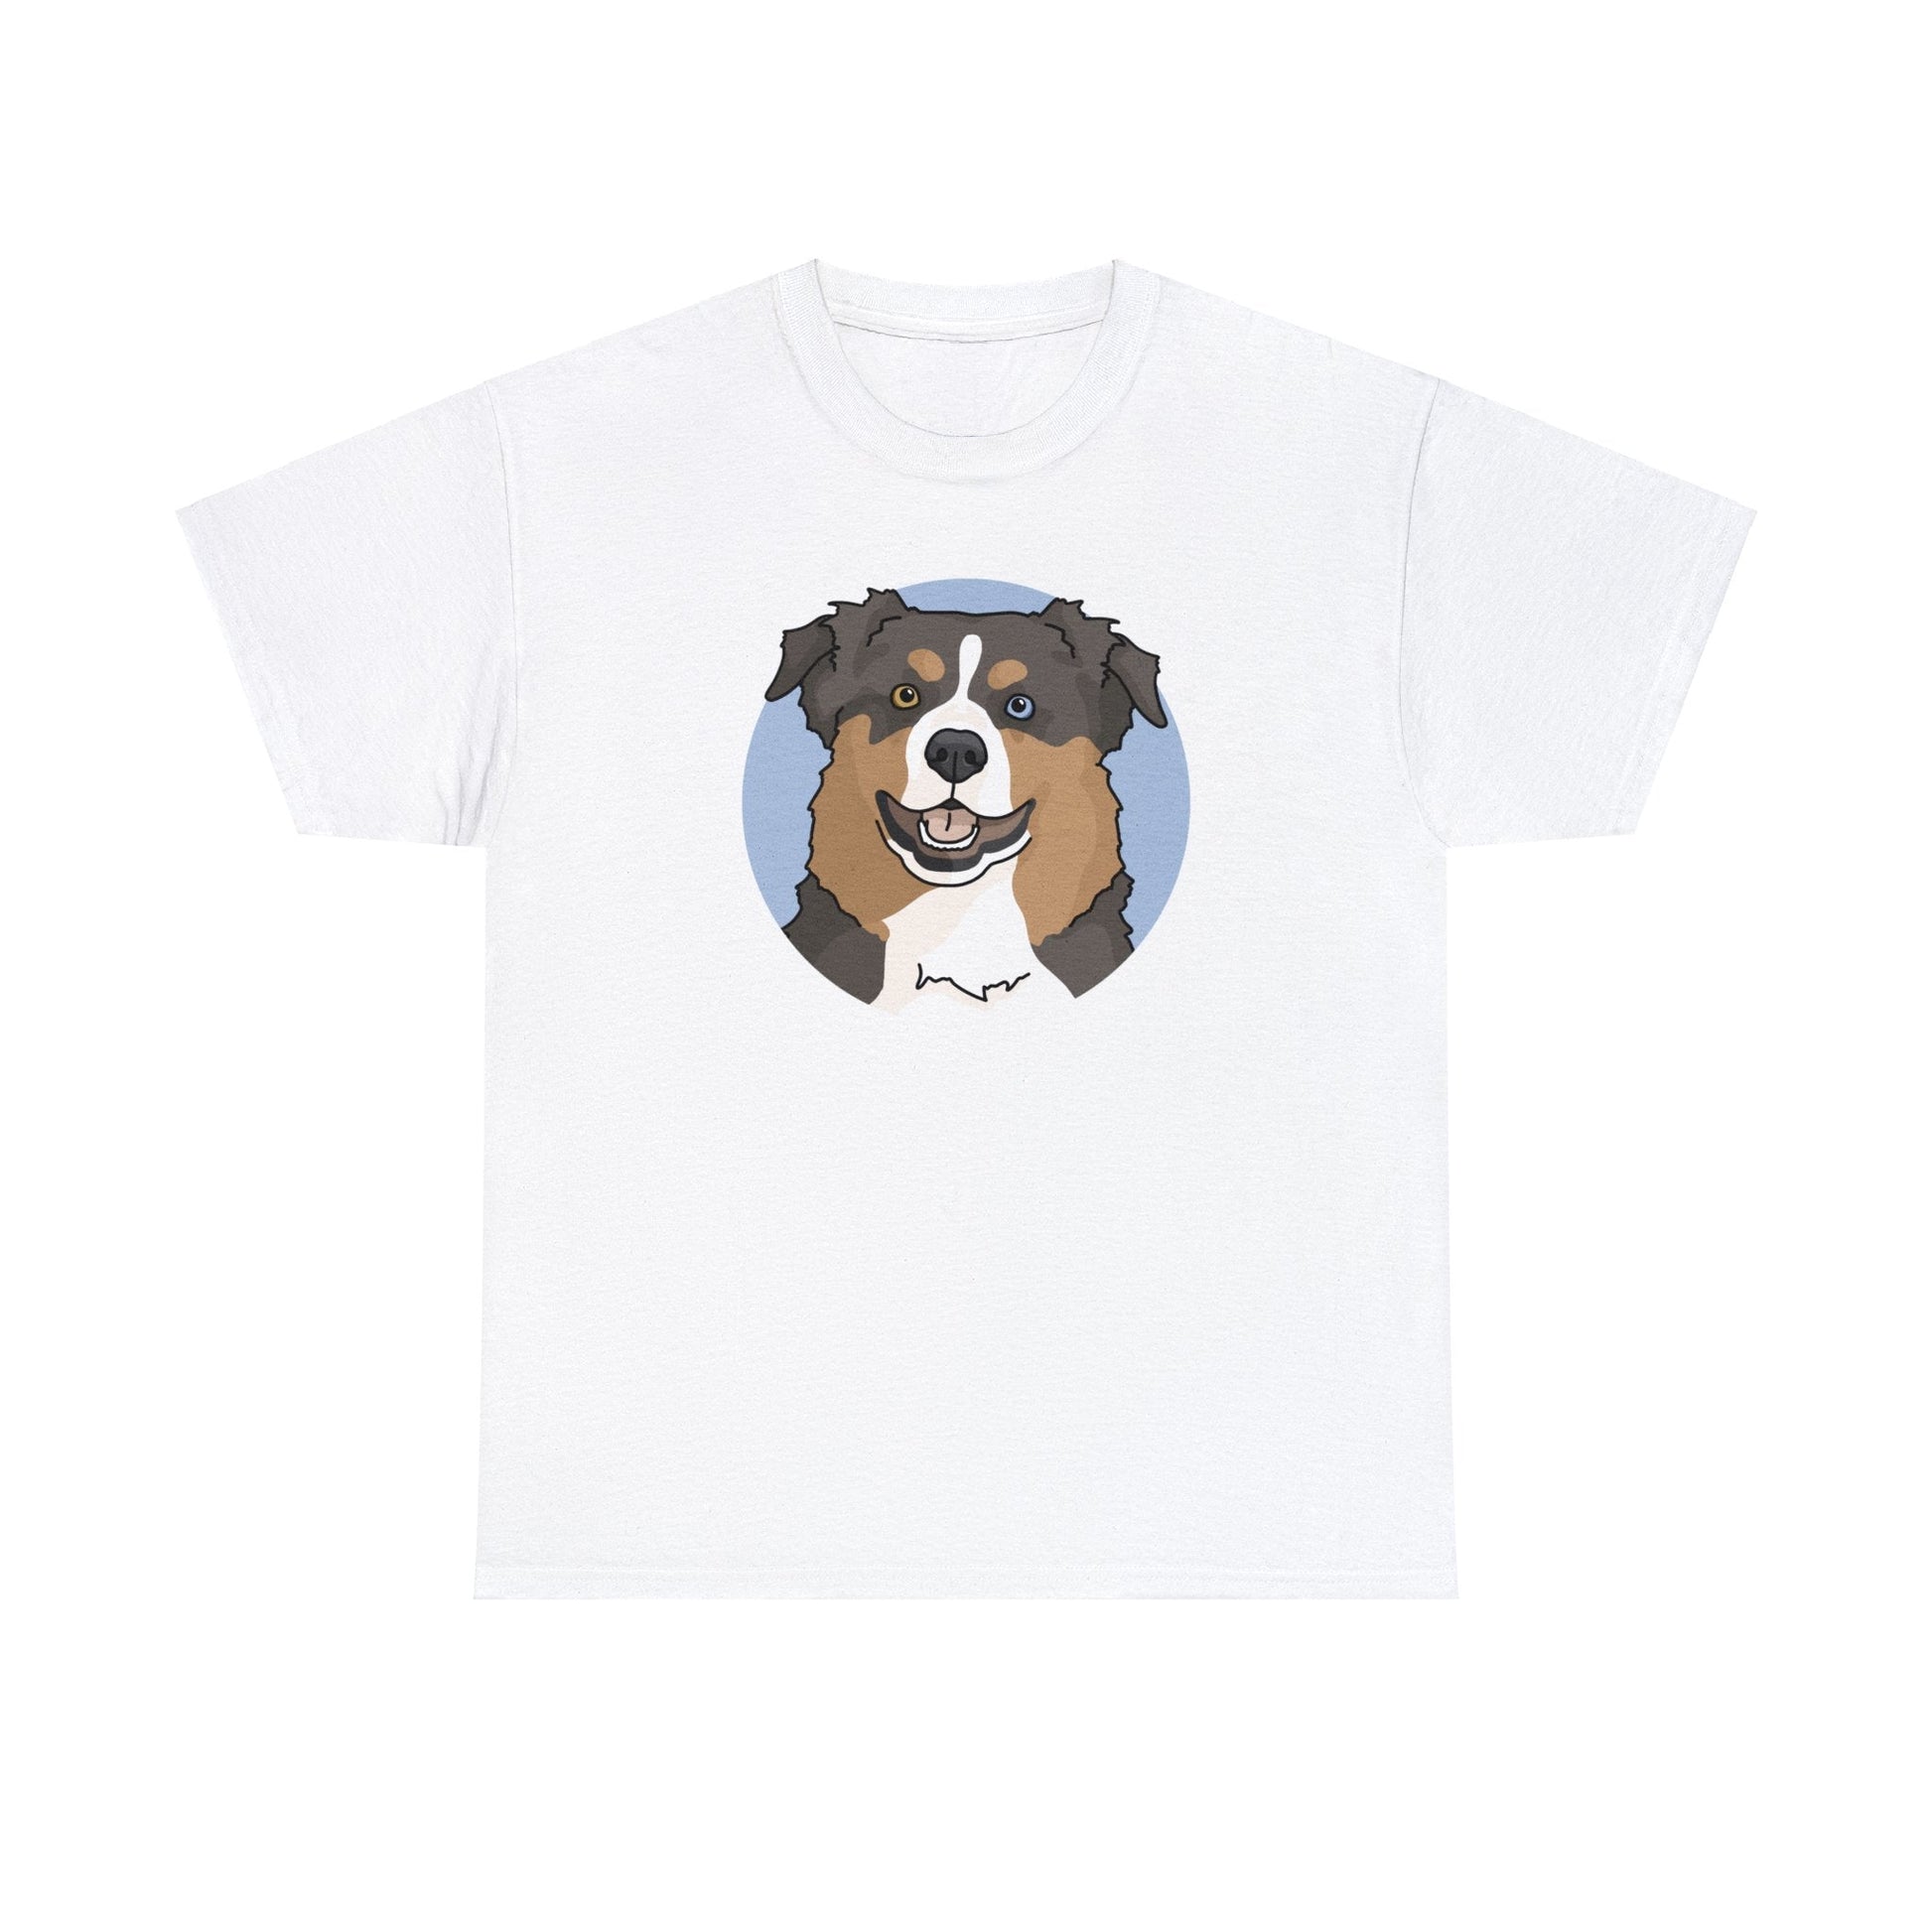 Australian Shepherd | T-shirt - Detezi Designs-11007827186465769940